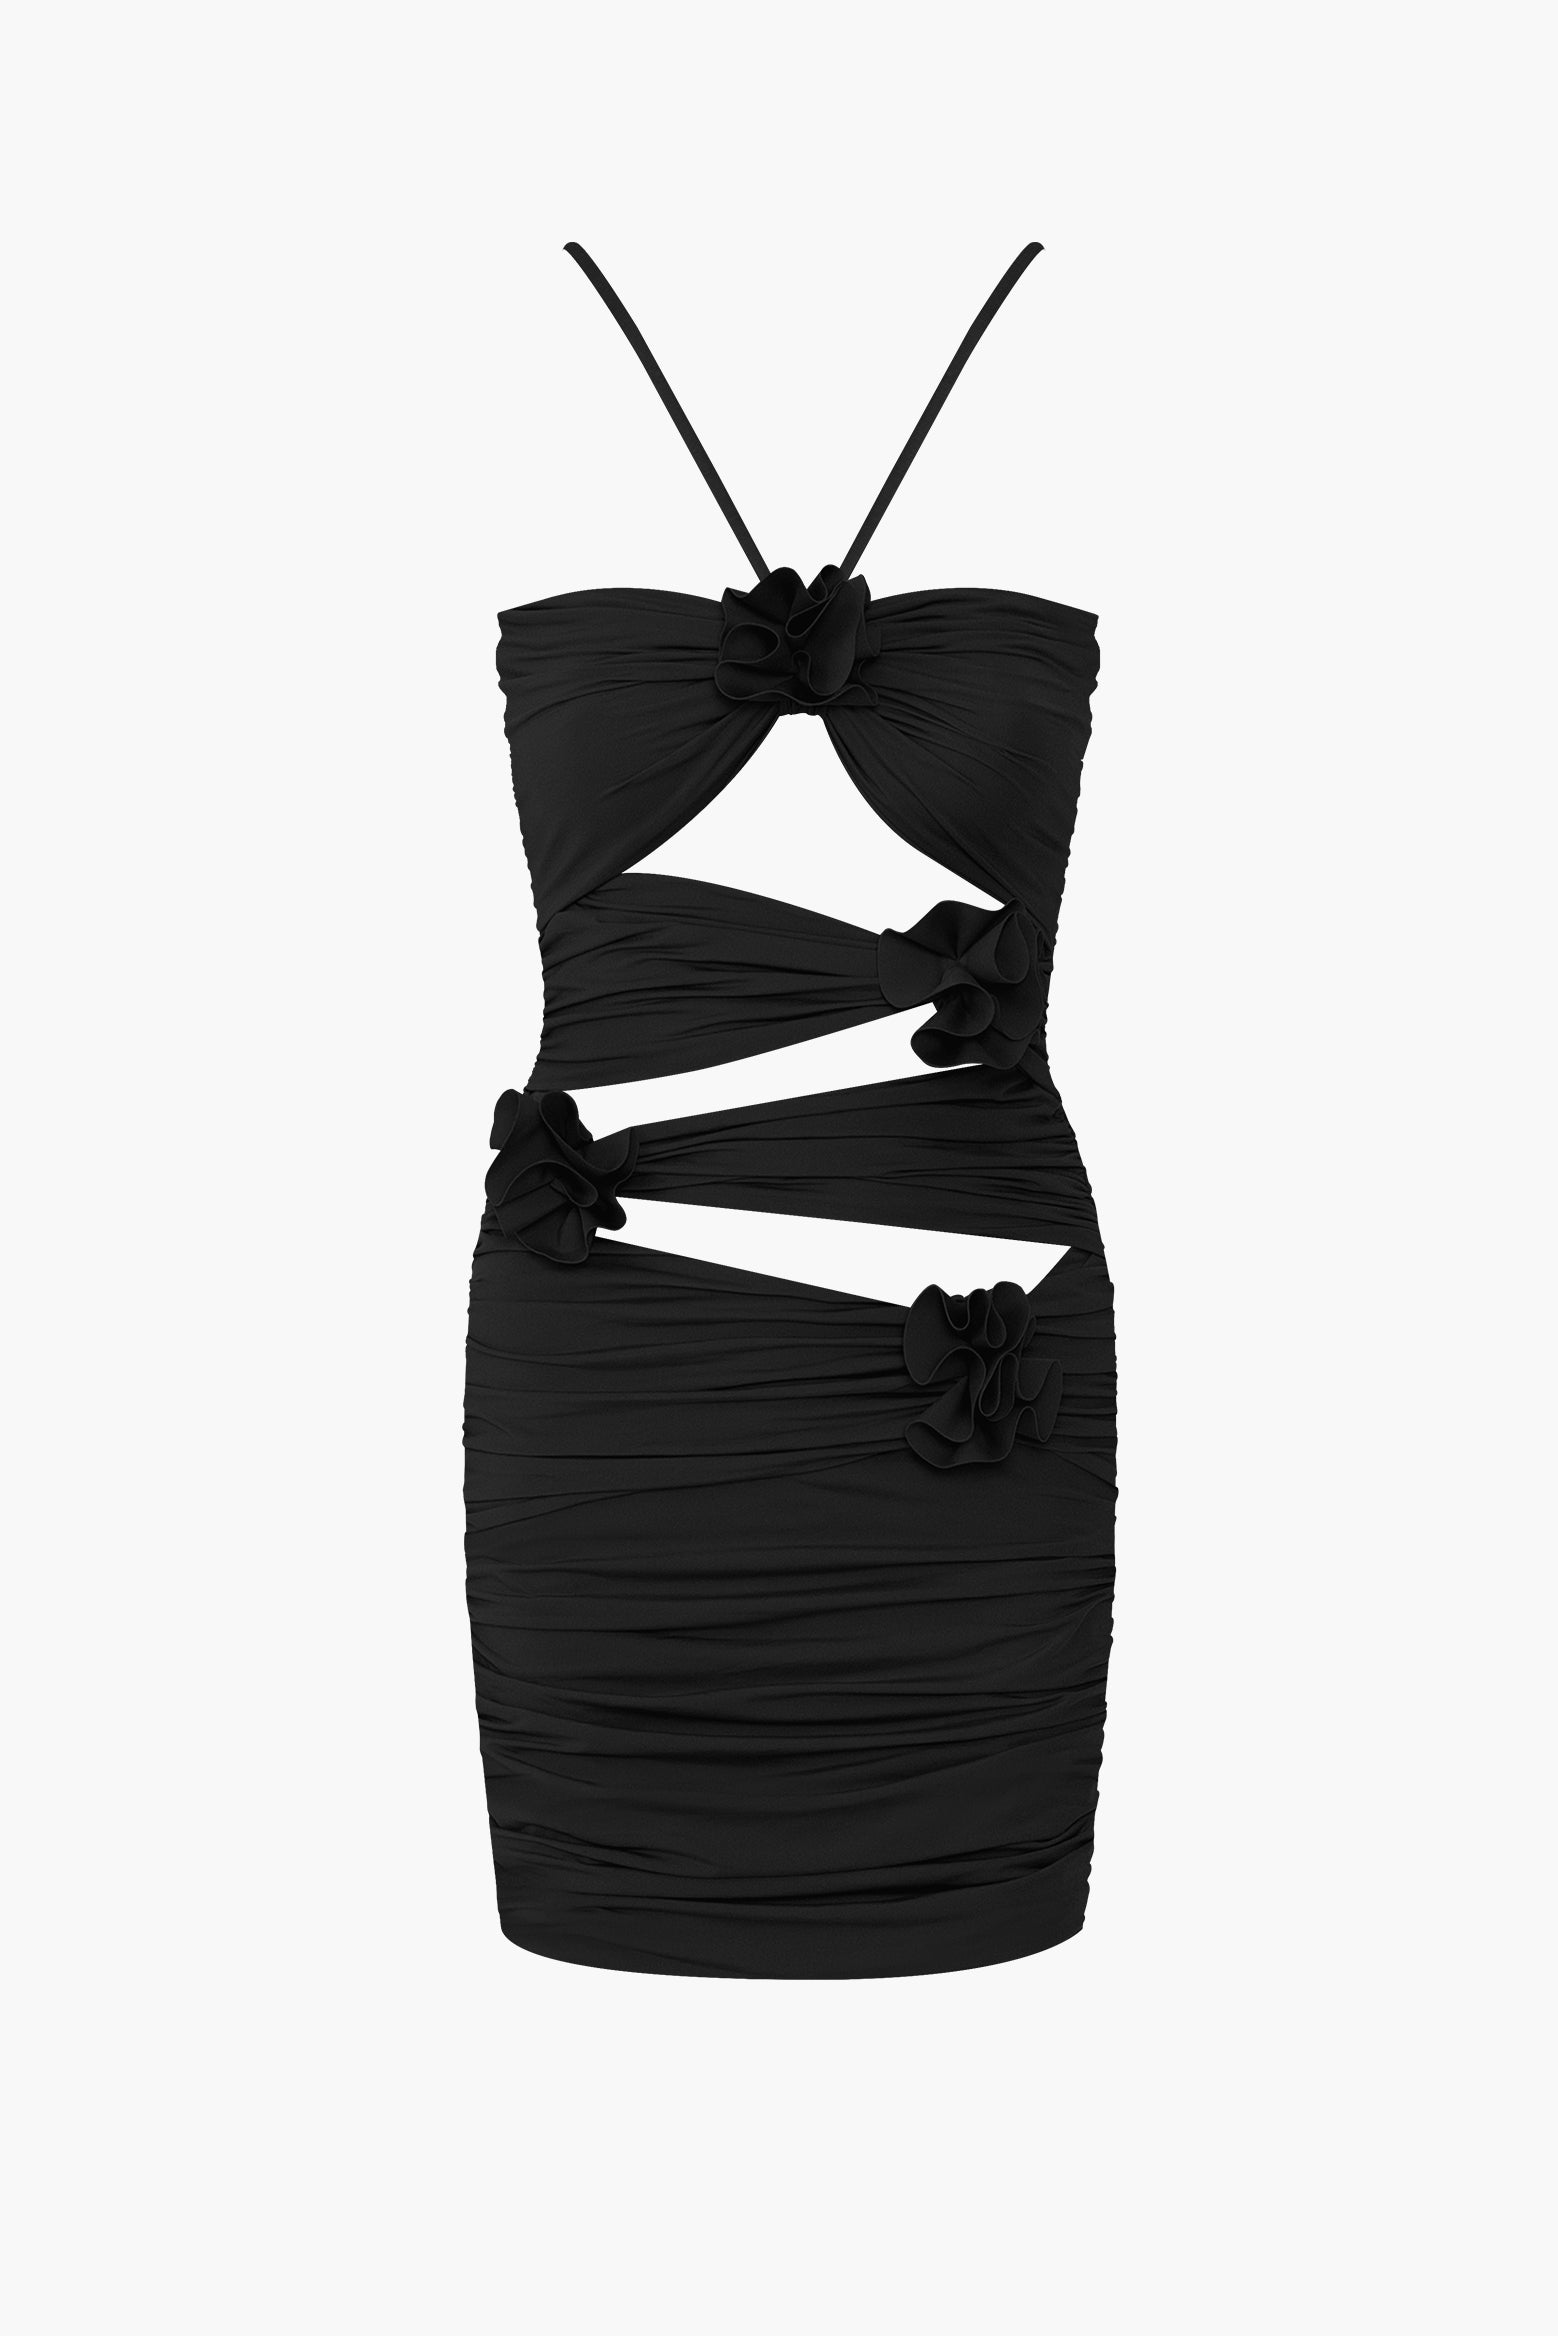 Maygel Coronel Coari Dress in Black available at The New Trend Australia. 